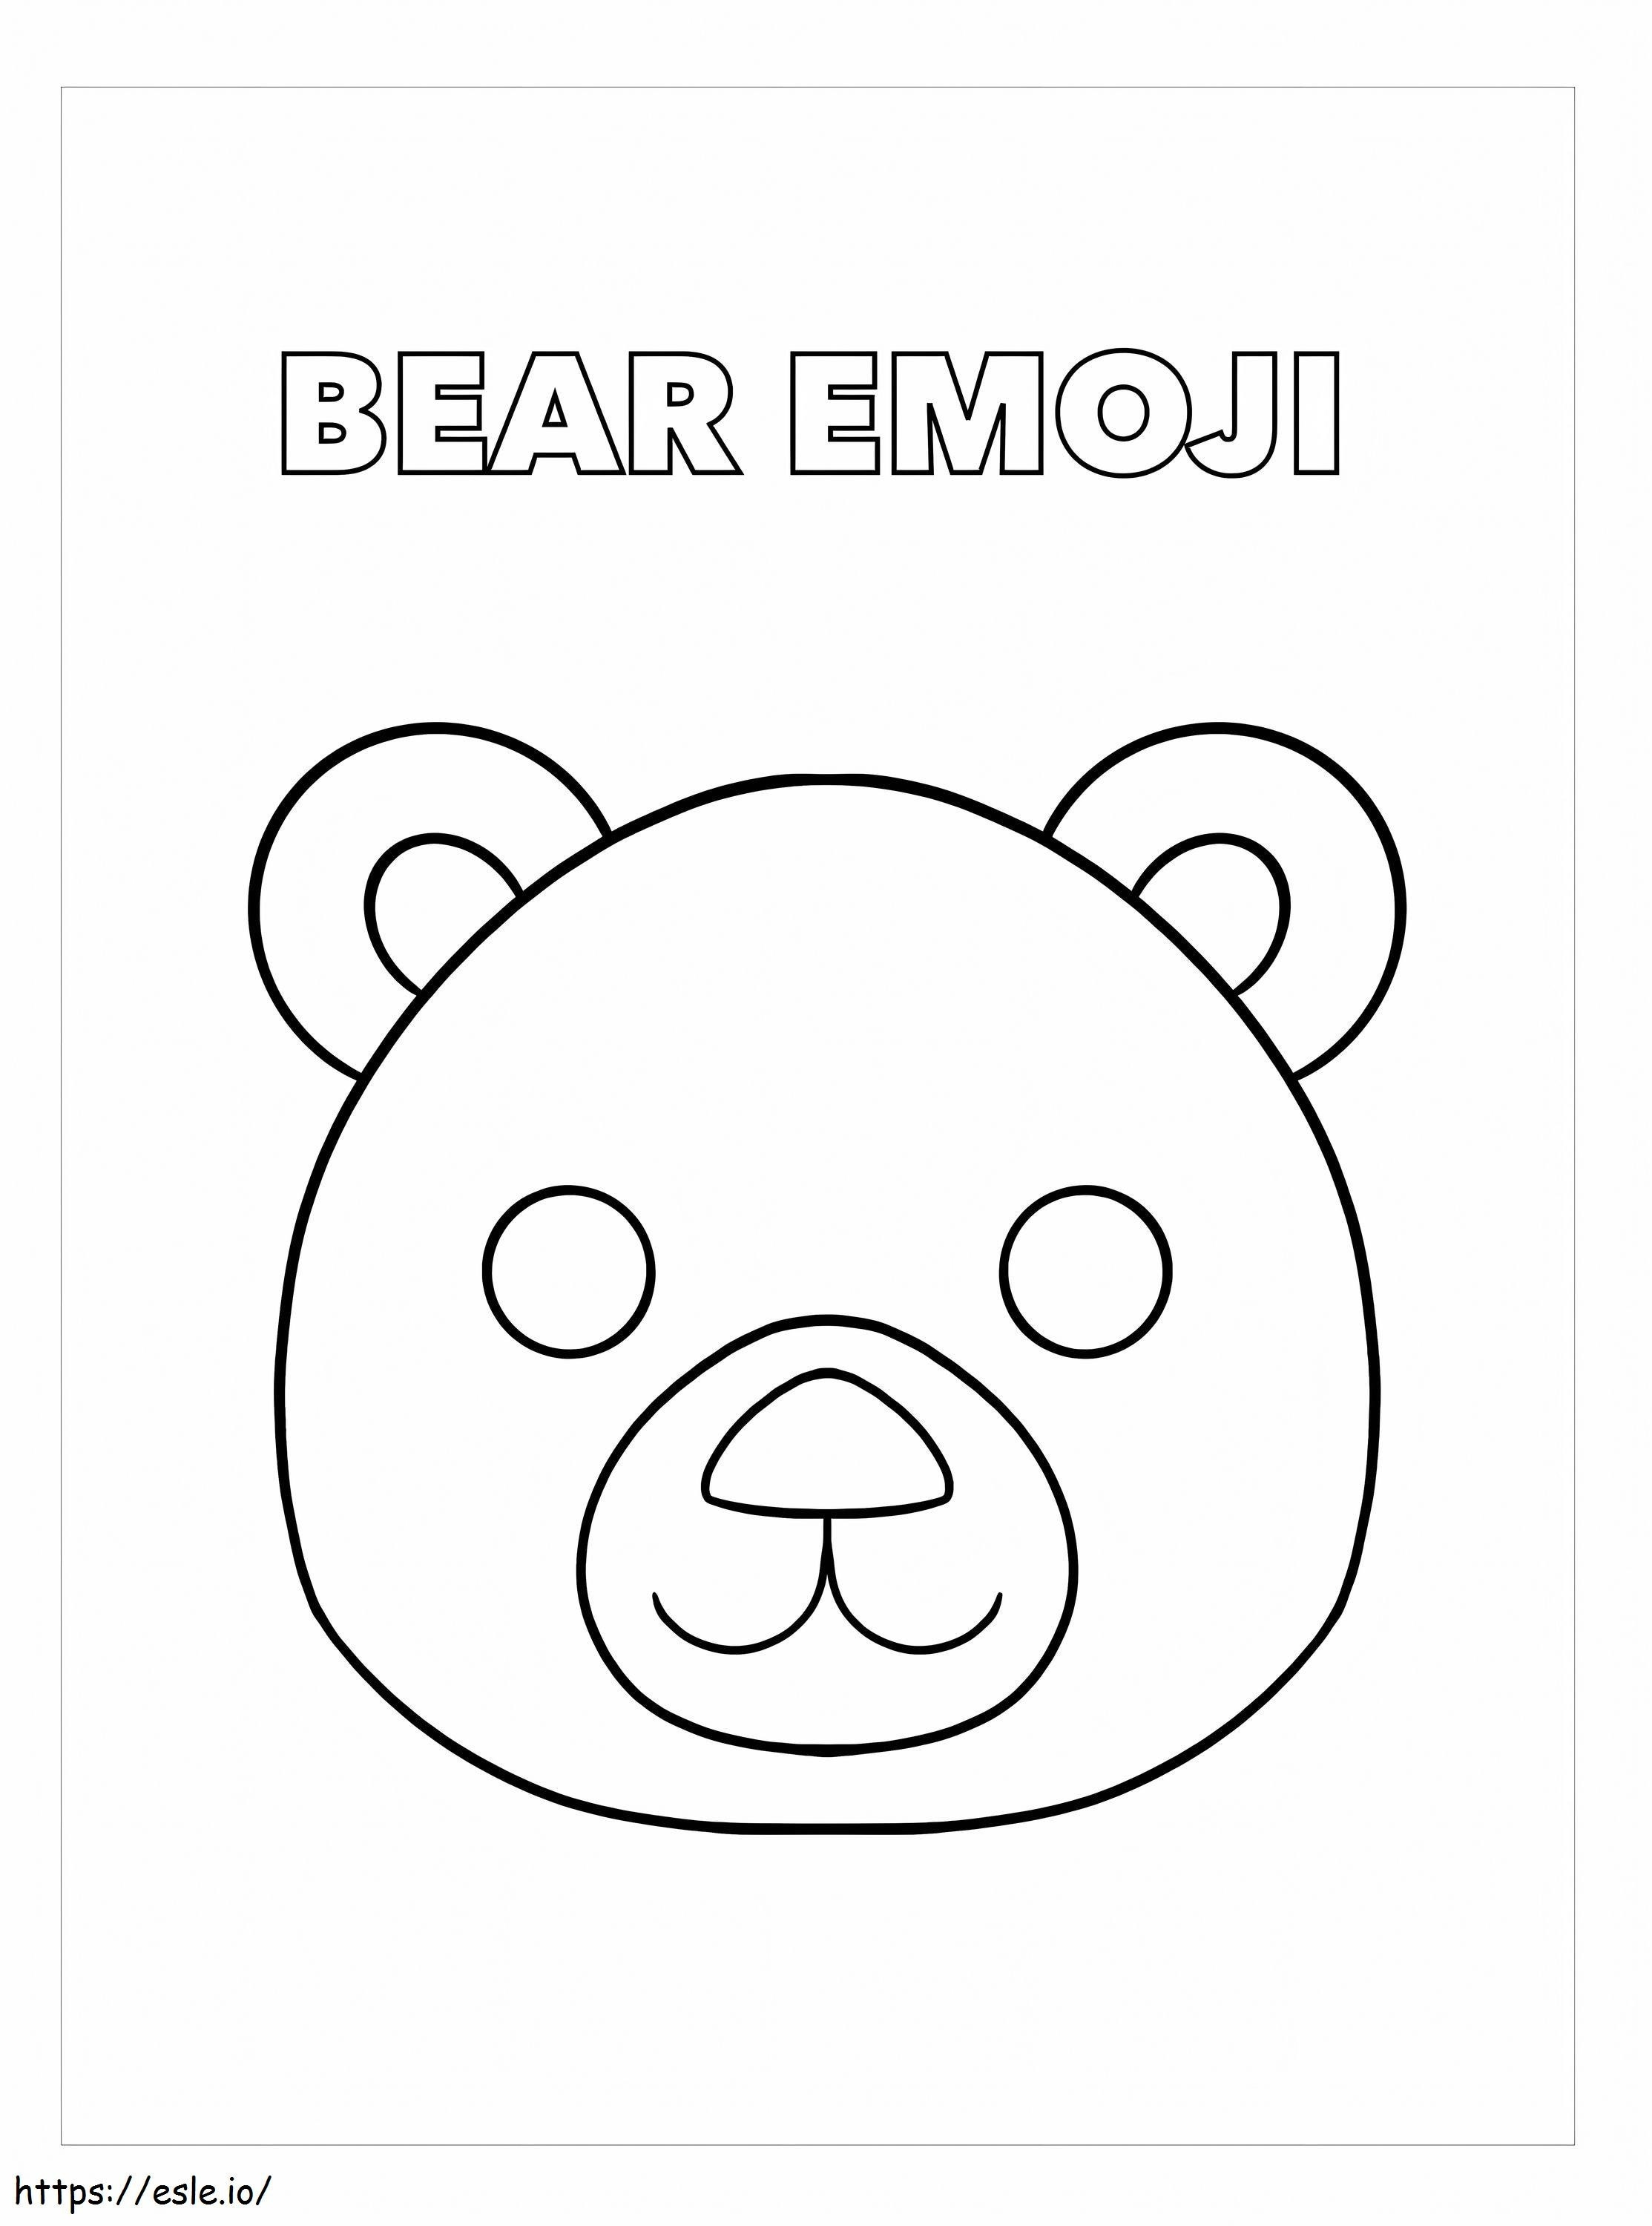 Coloriage Très Emoji à imprimer dessin